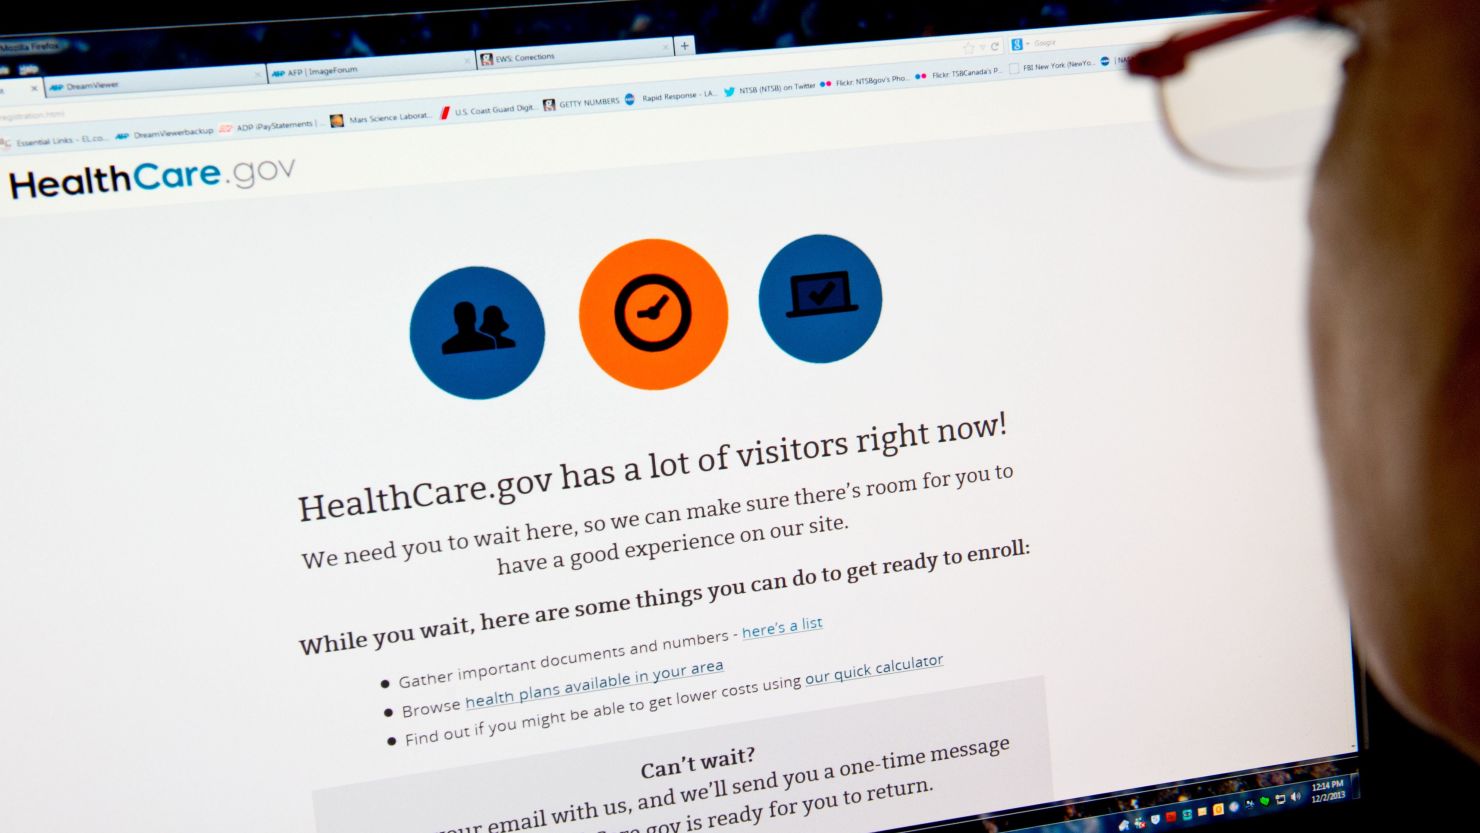 The Healthcare.gov website had a bumpy rollout